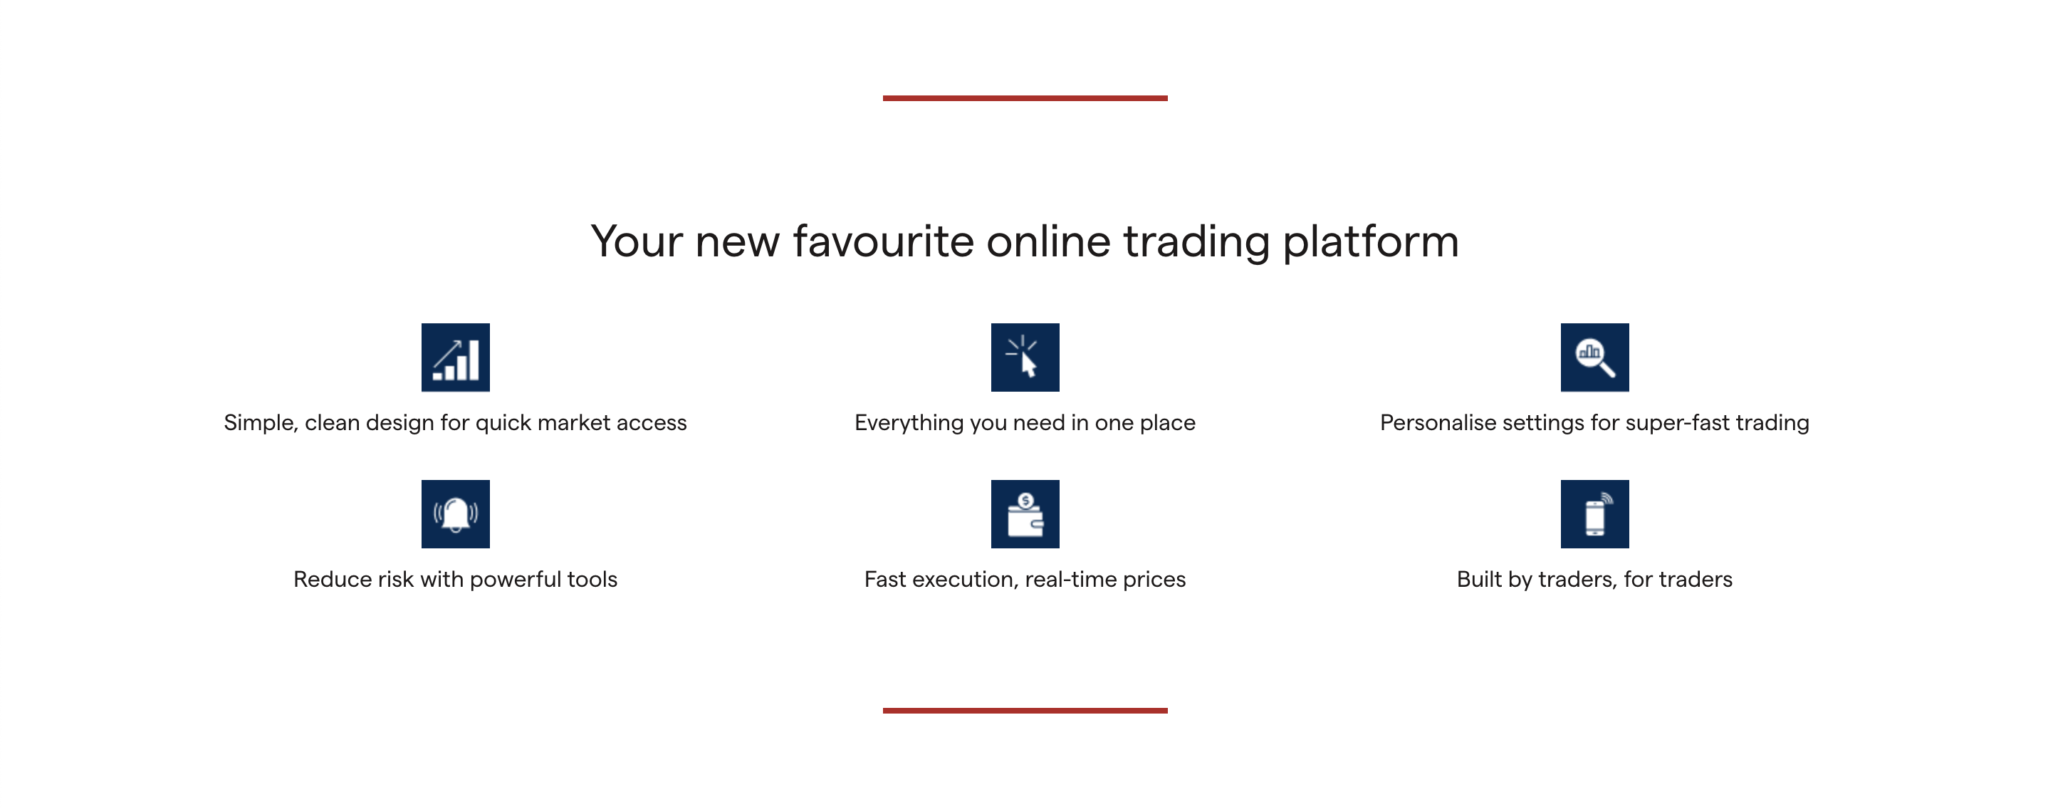 IG Trading Platform Review UK - Pros & Cons Revealed